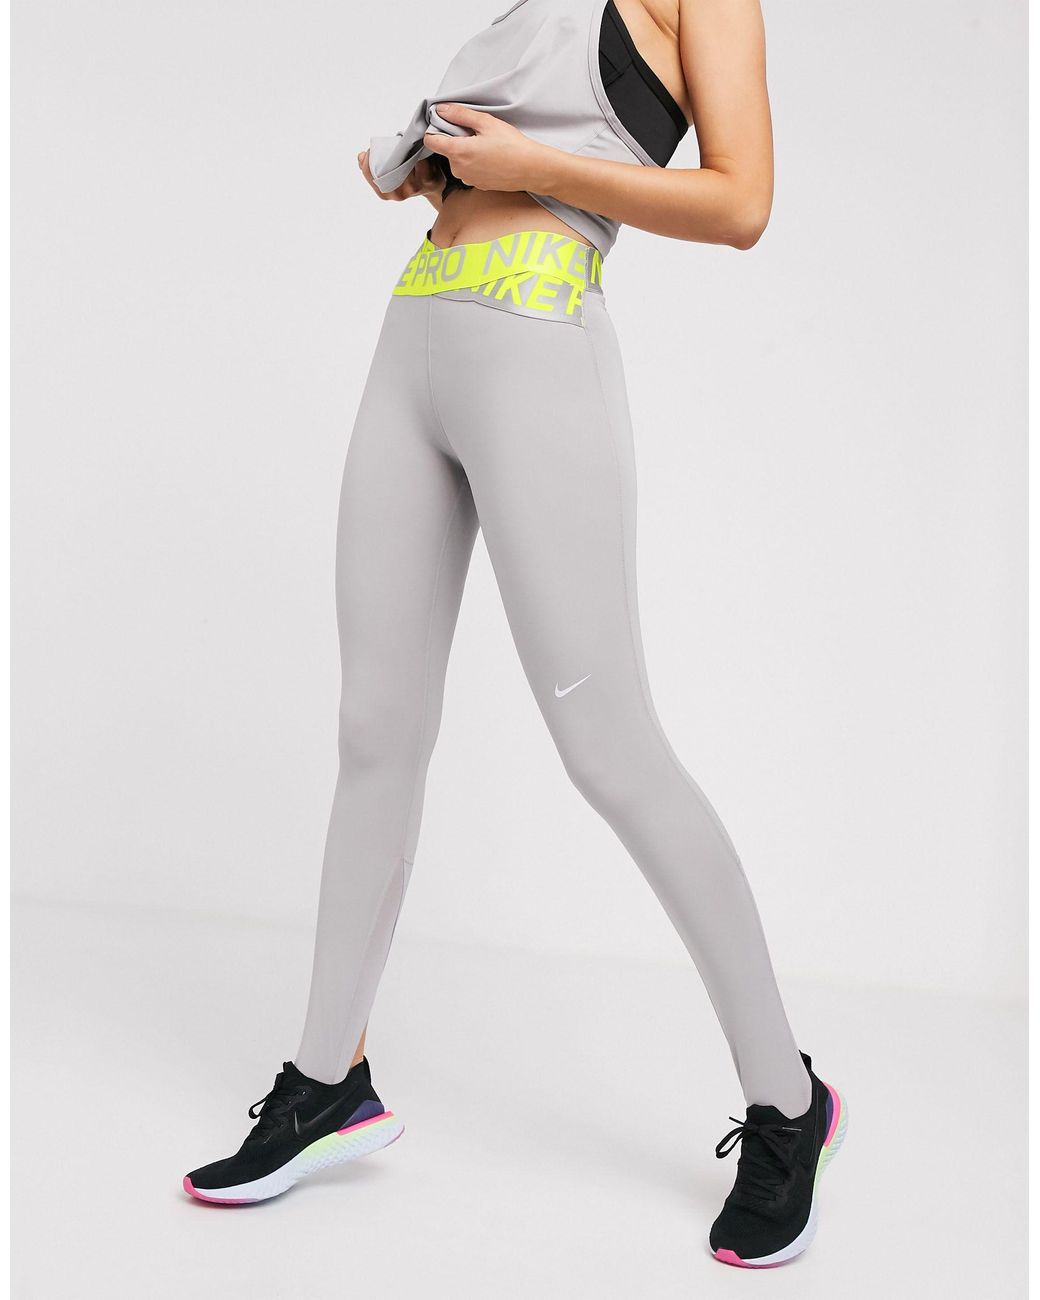 Nike Pro Intertwist Tights in Grey/Lime (Grey) | Lyst Australia